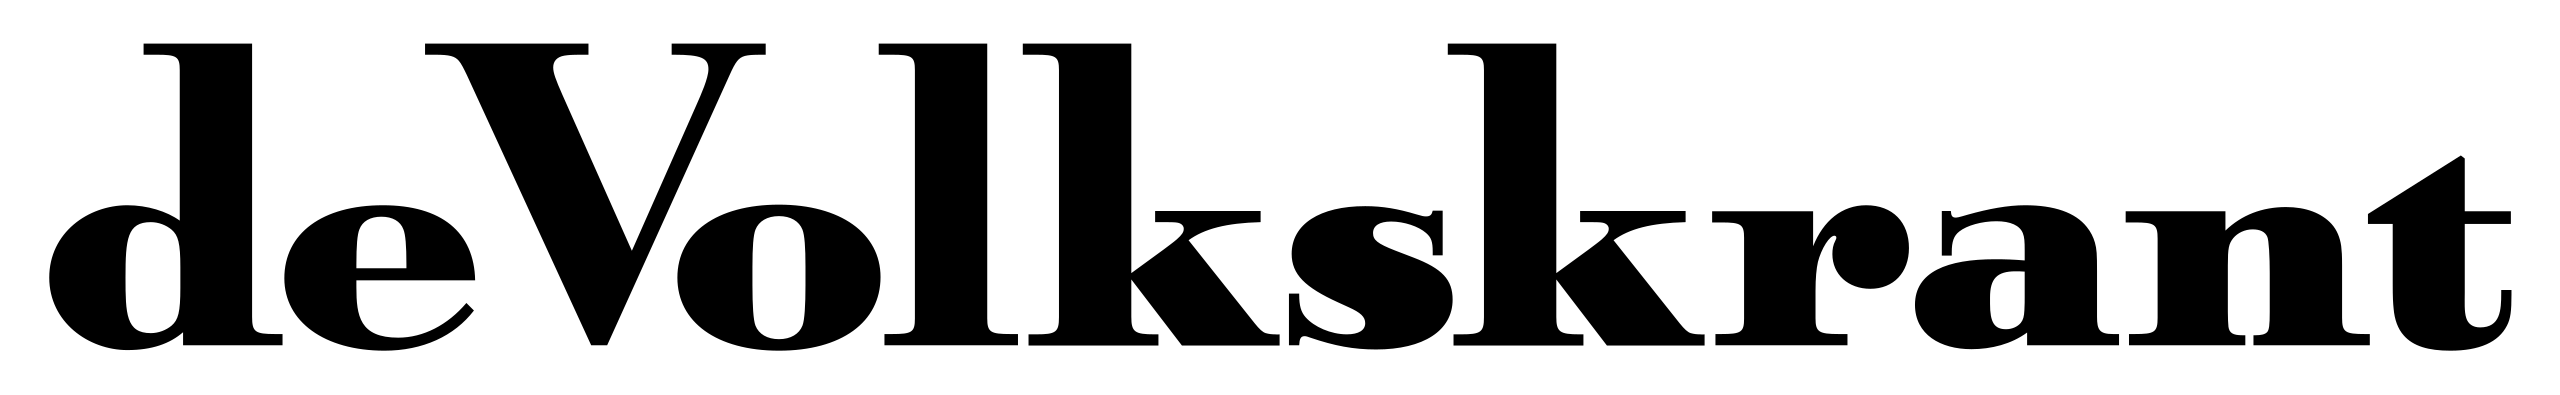 Volkskrant logo breed